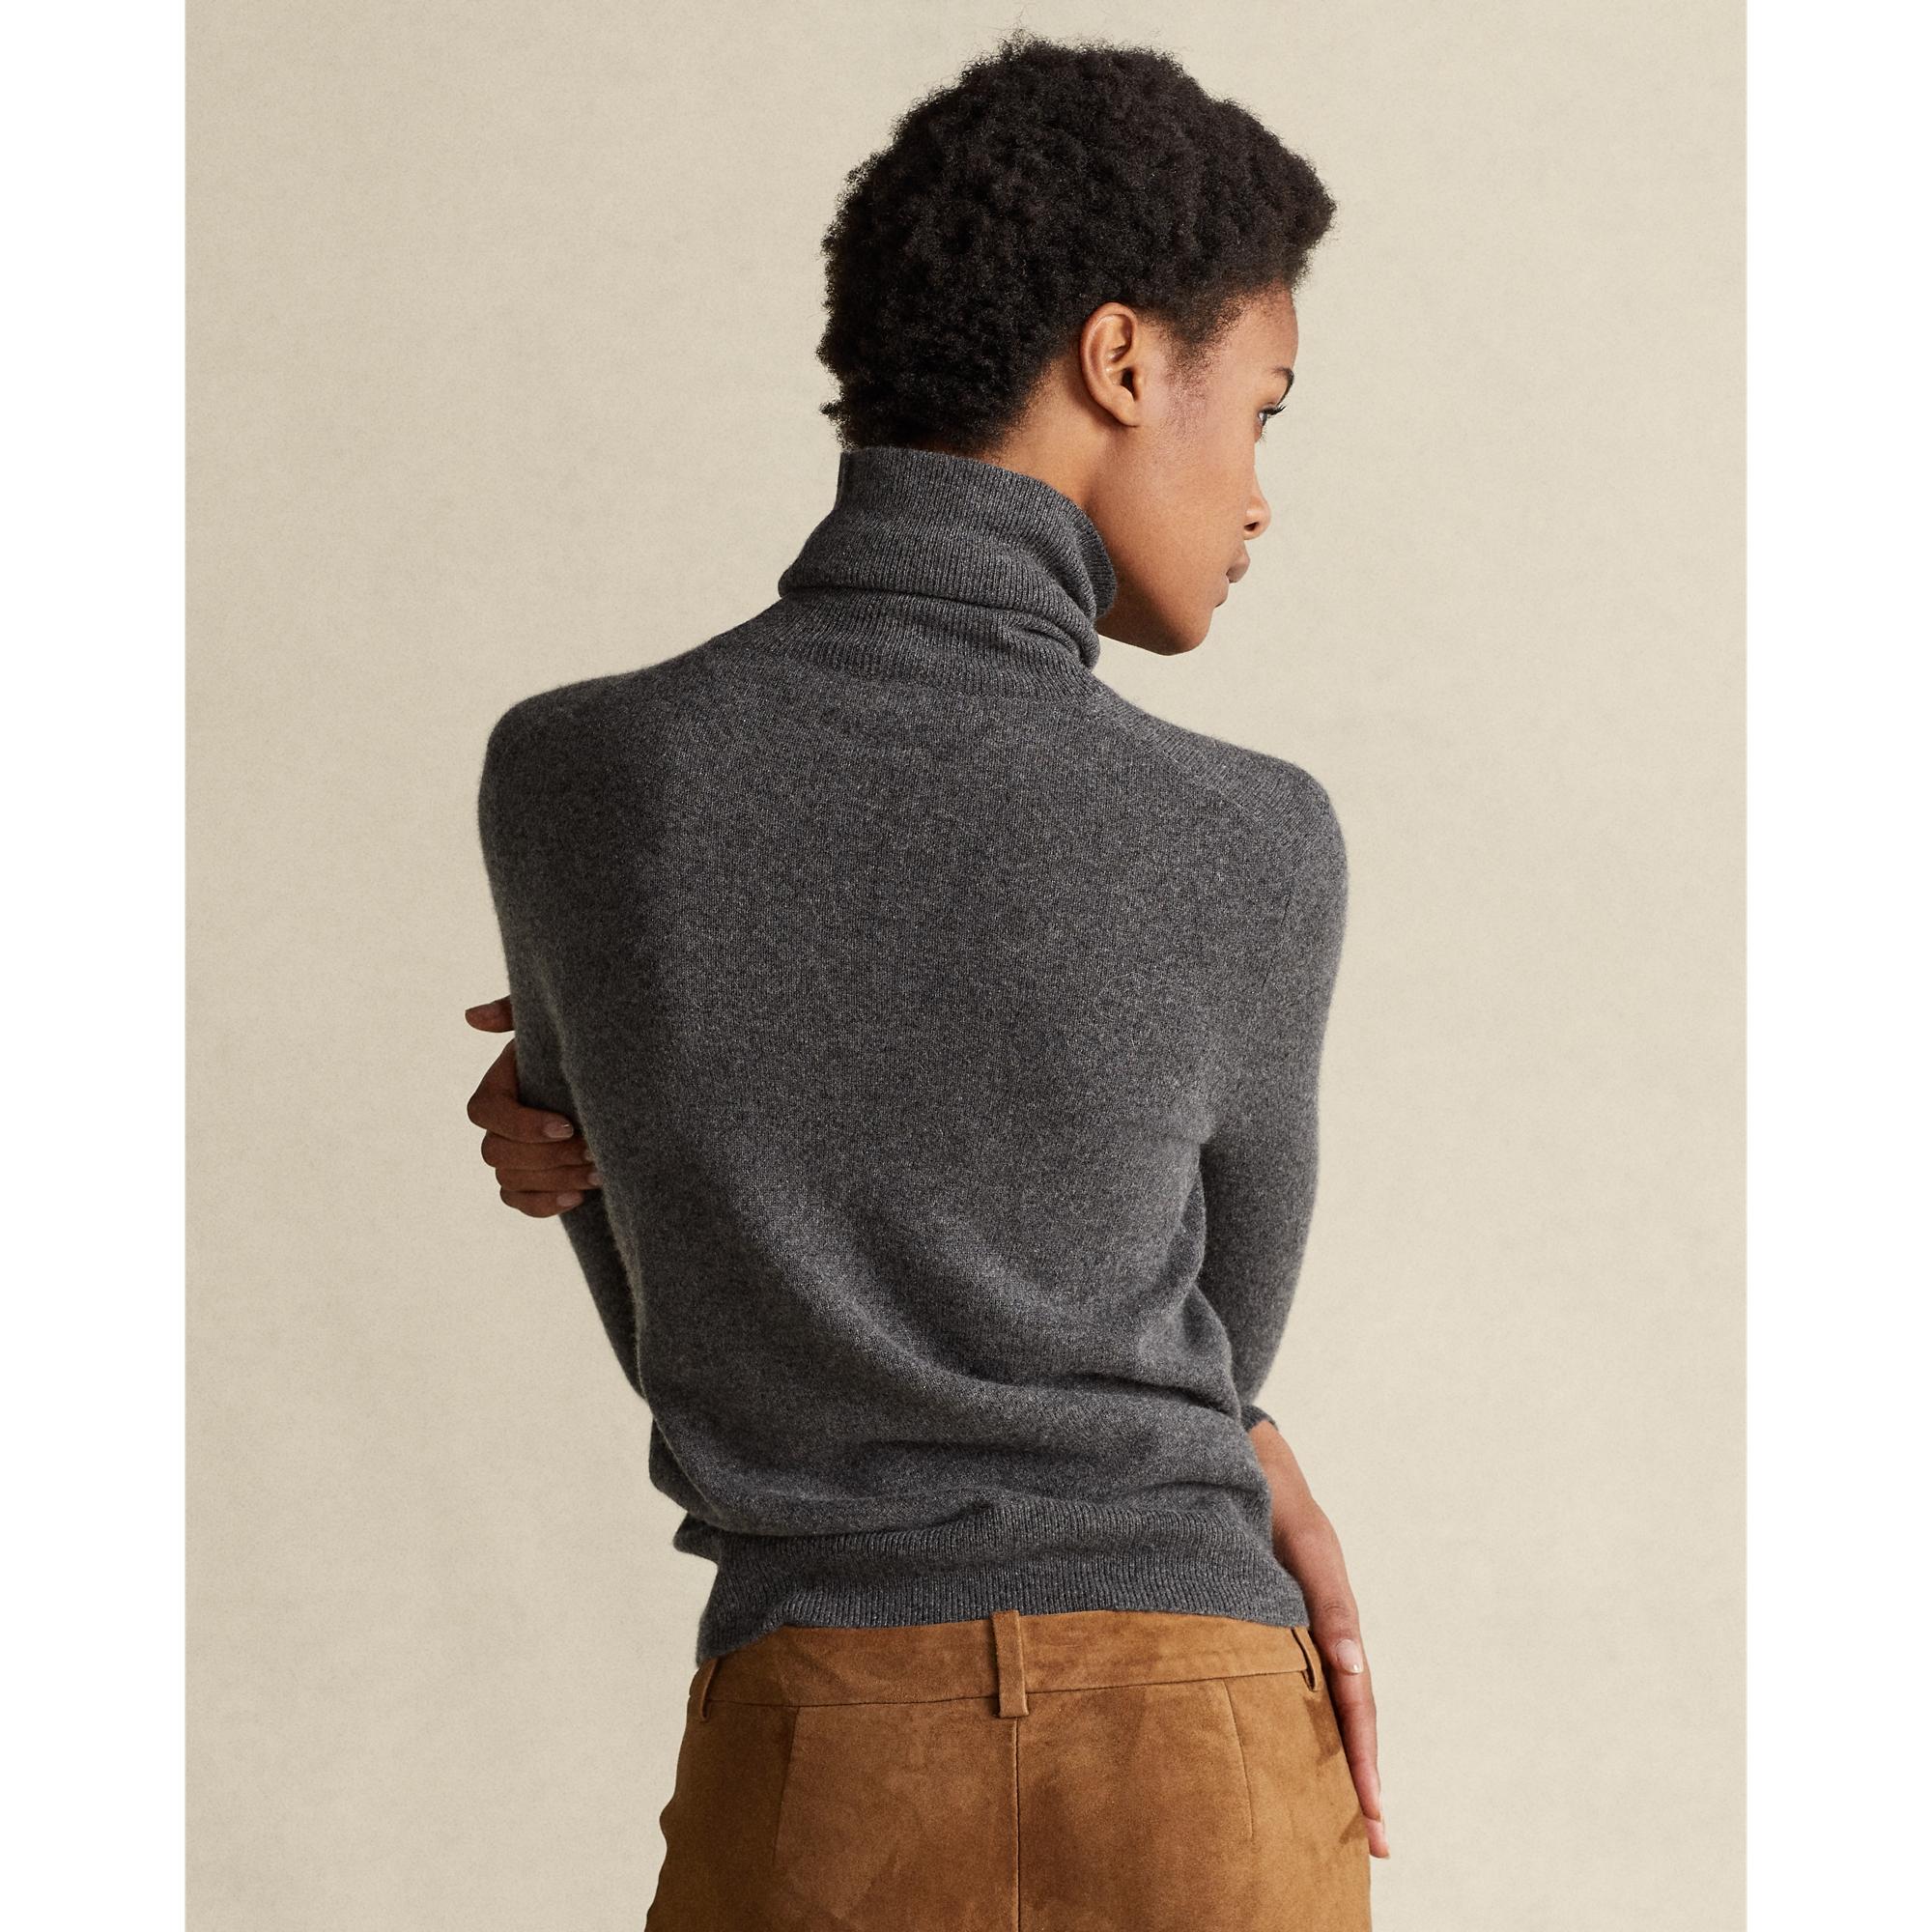 Ralph Lauren Slim Fit Cashmere Turtleneck Sweater in Gray - Lyst